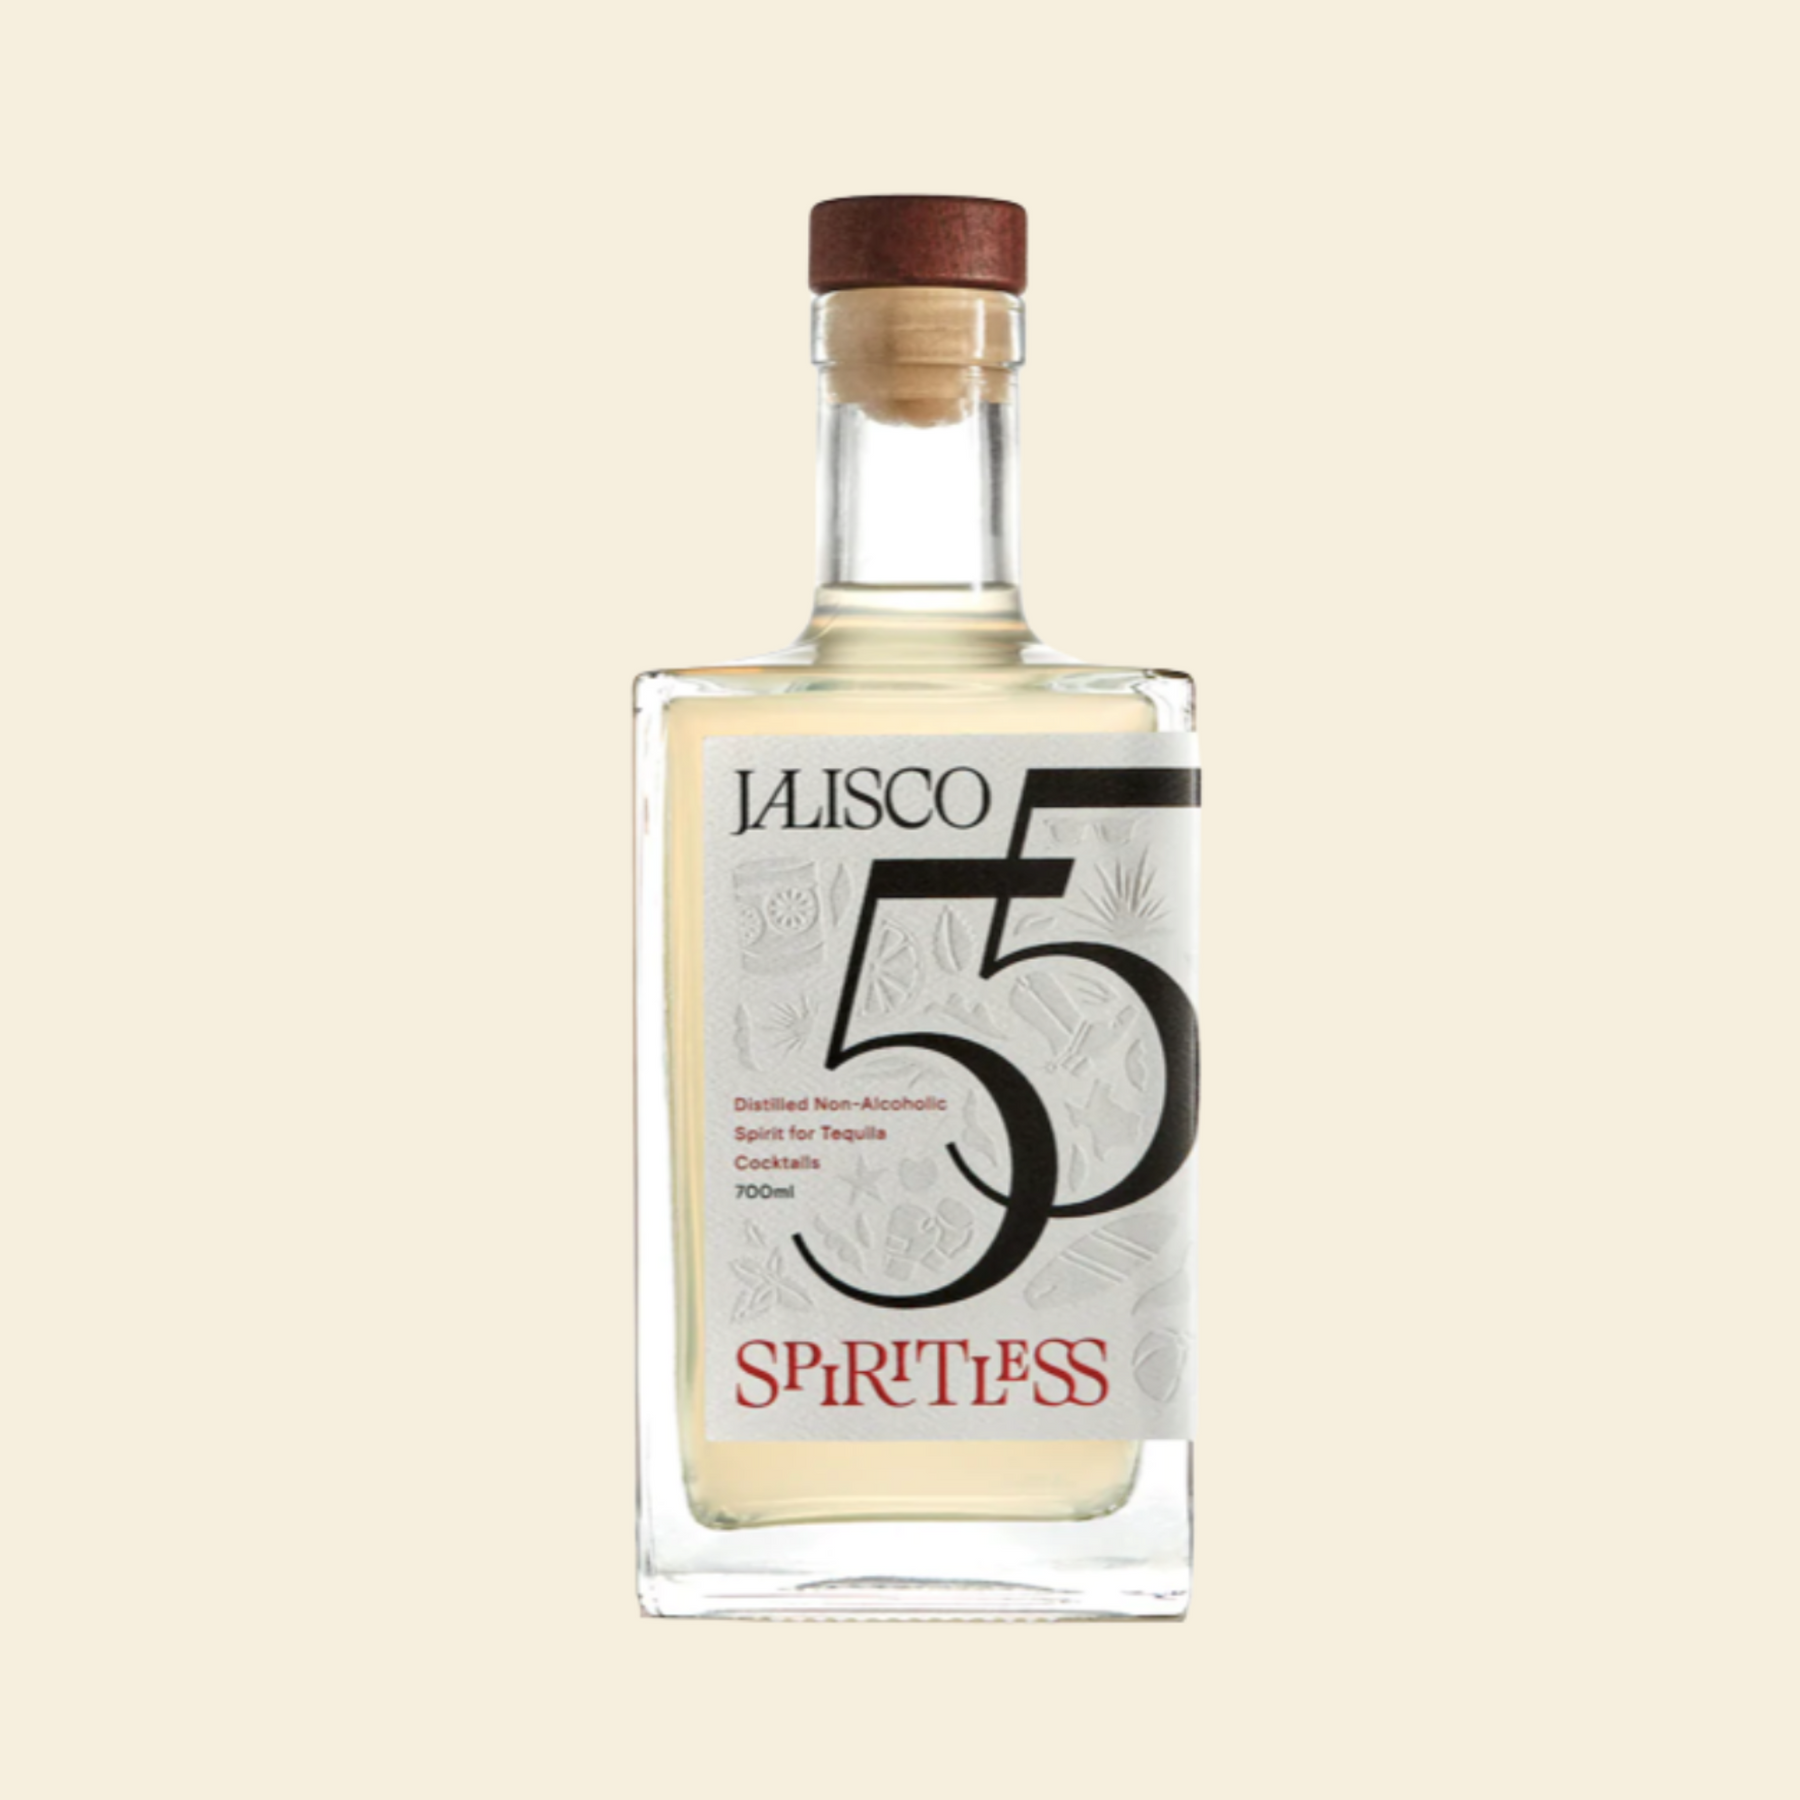 Spiritless - Jalisco 55 Tequila